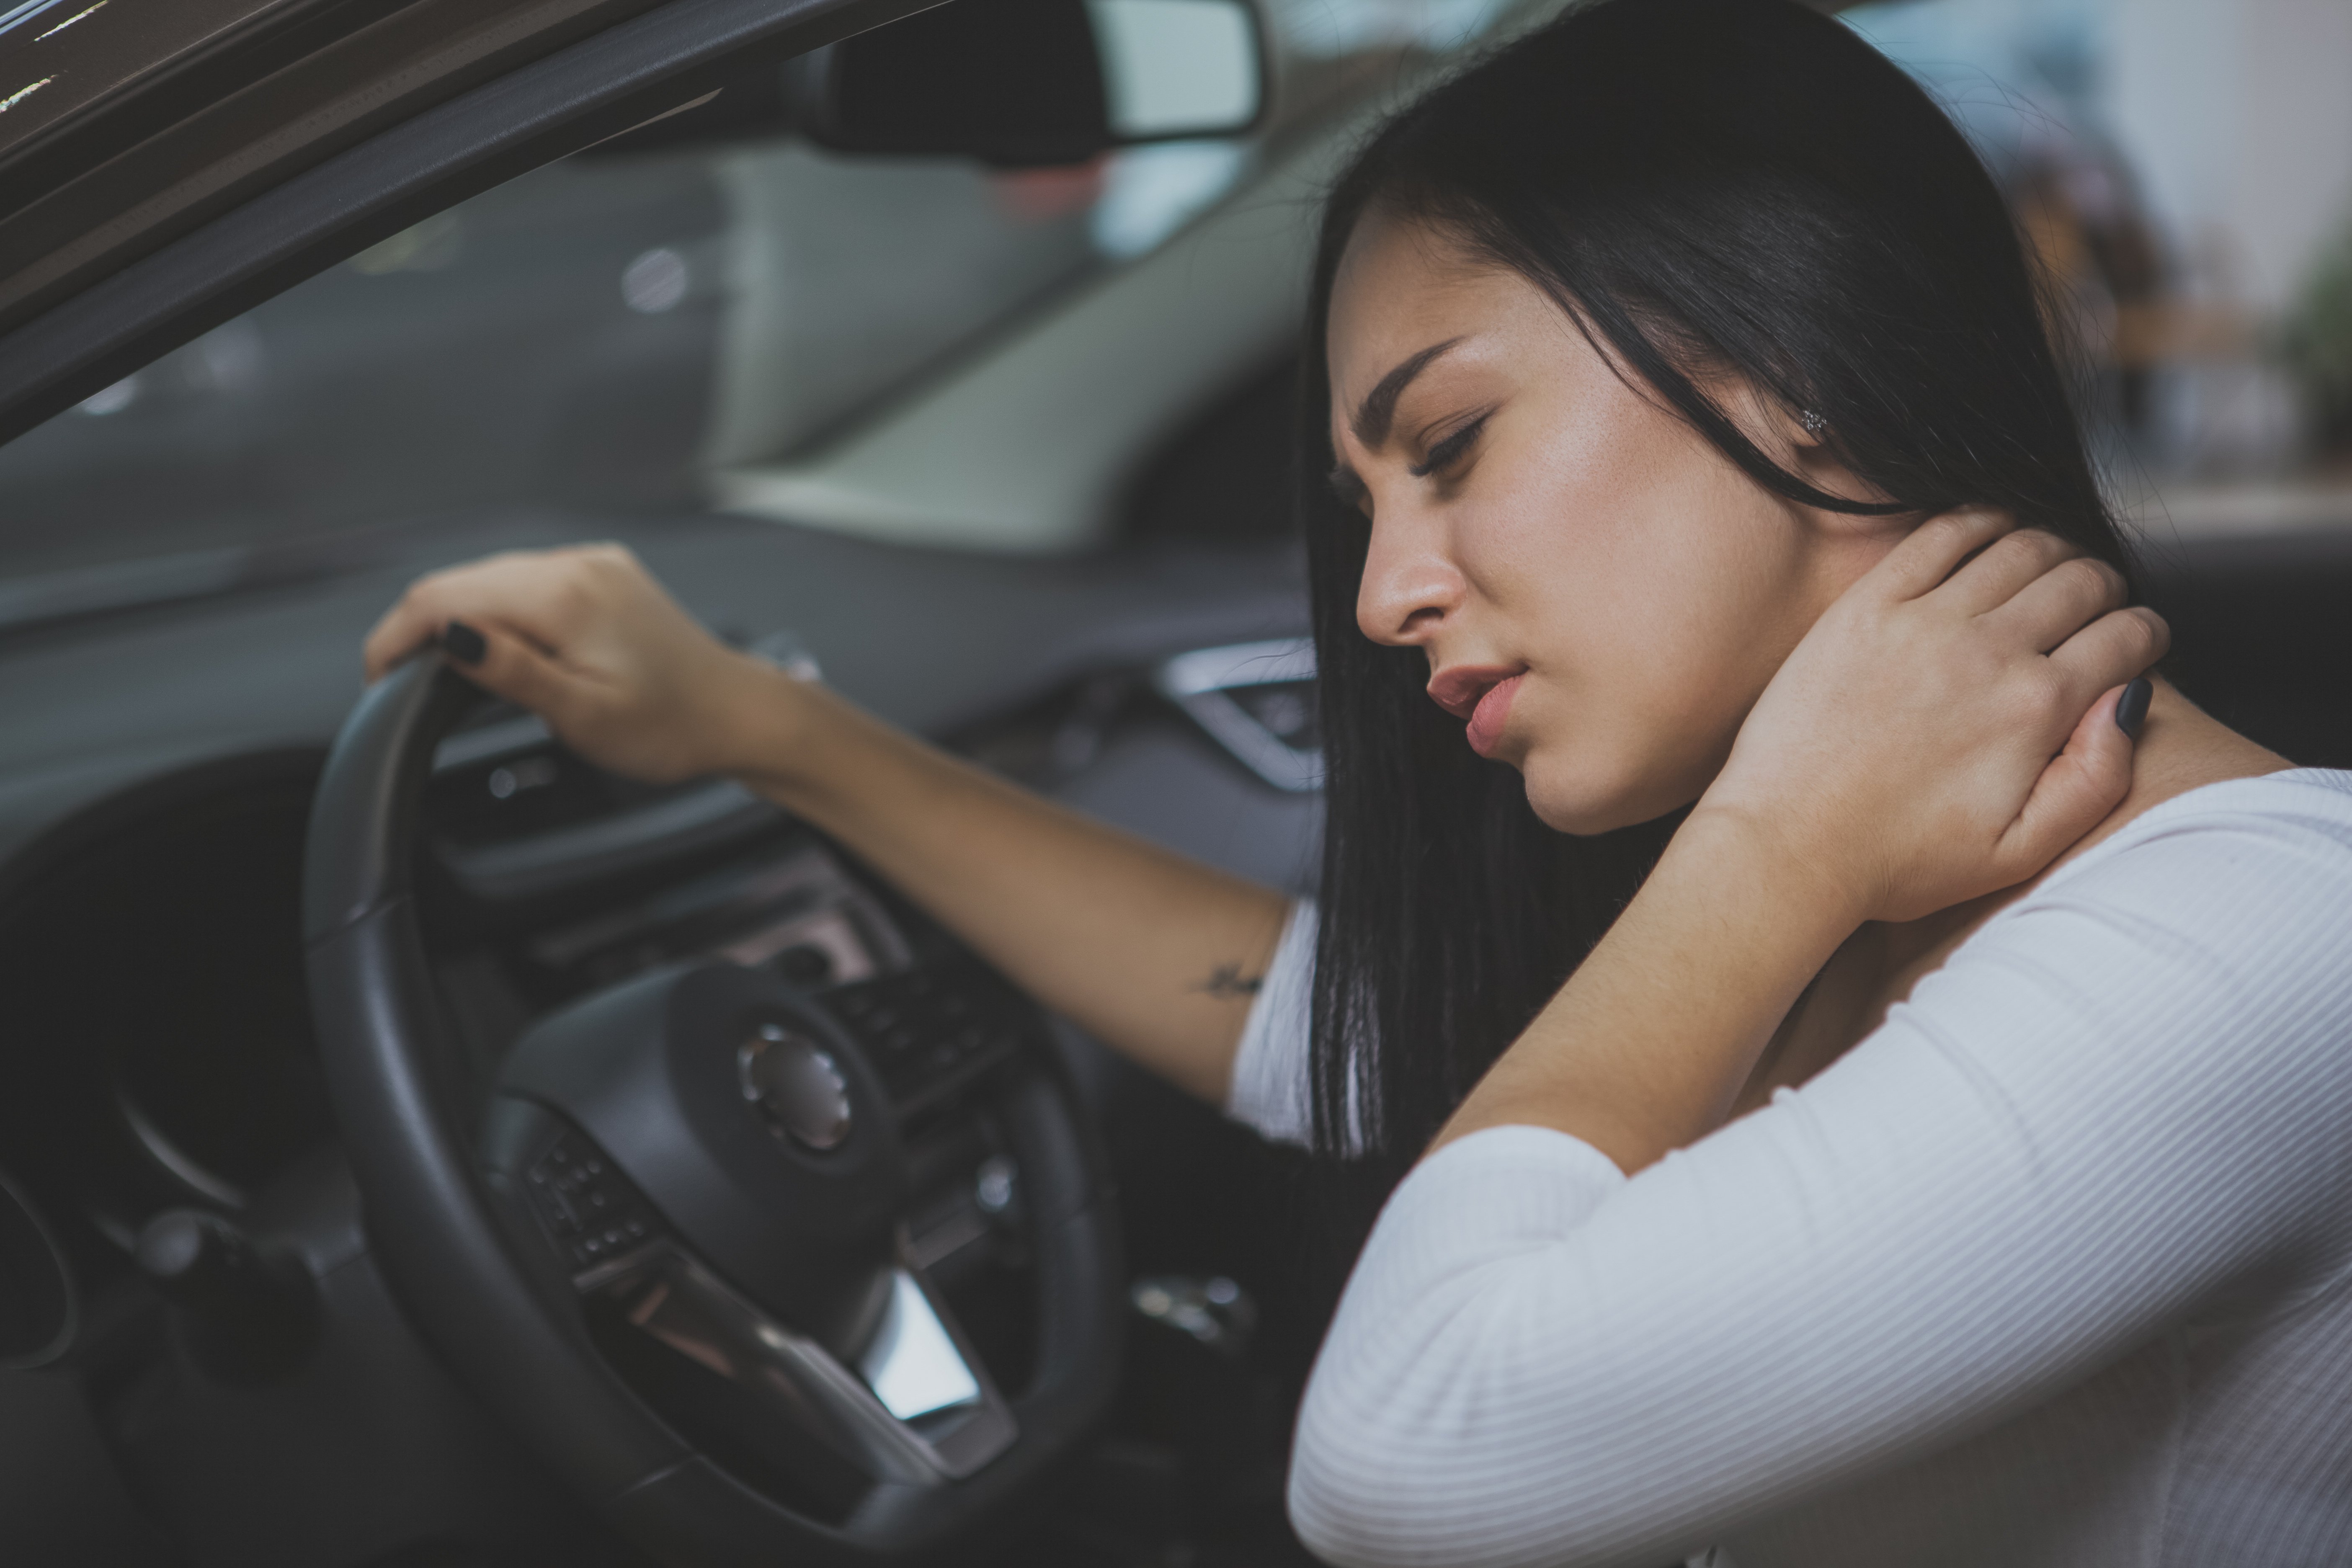 Motor vehicle accidents often result in whiplash